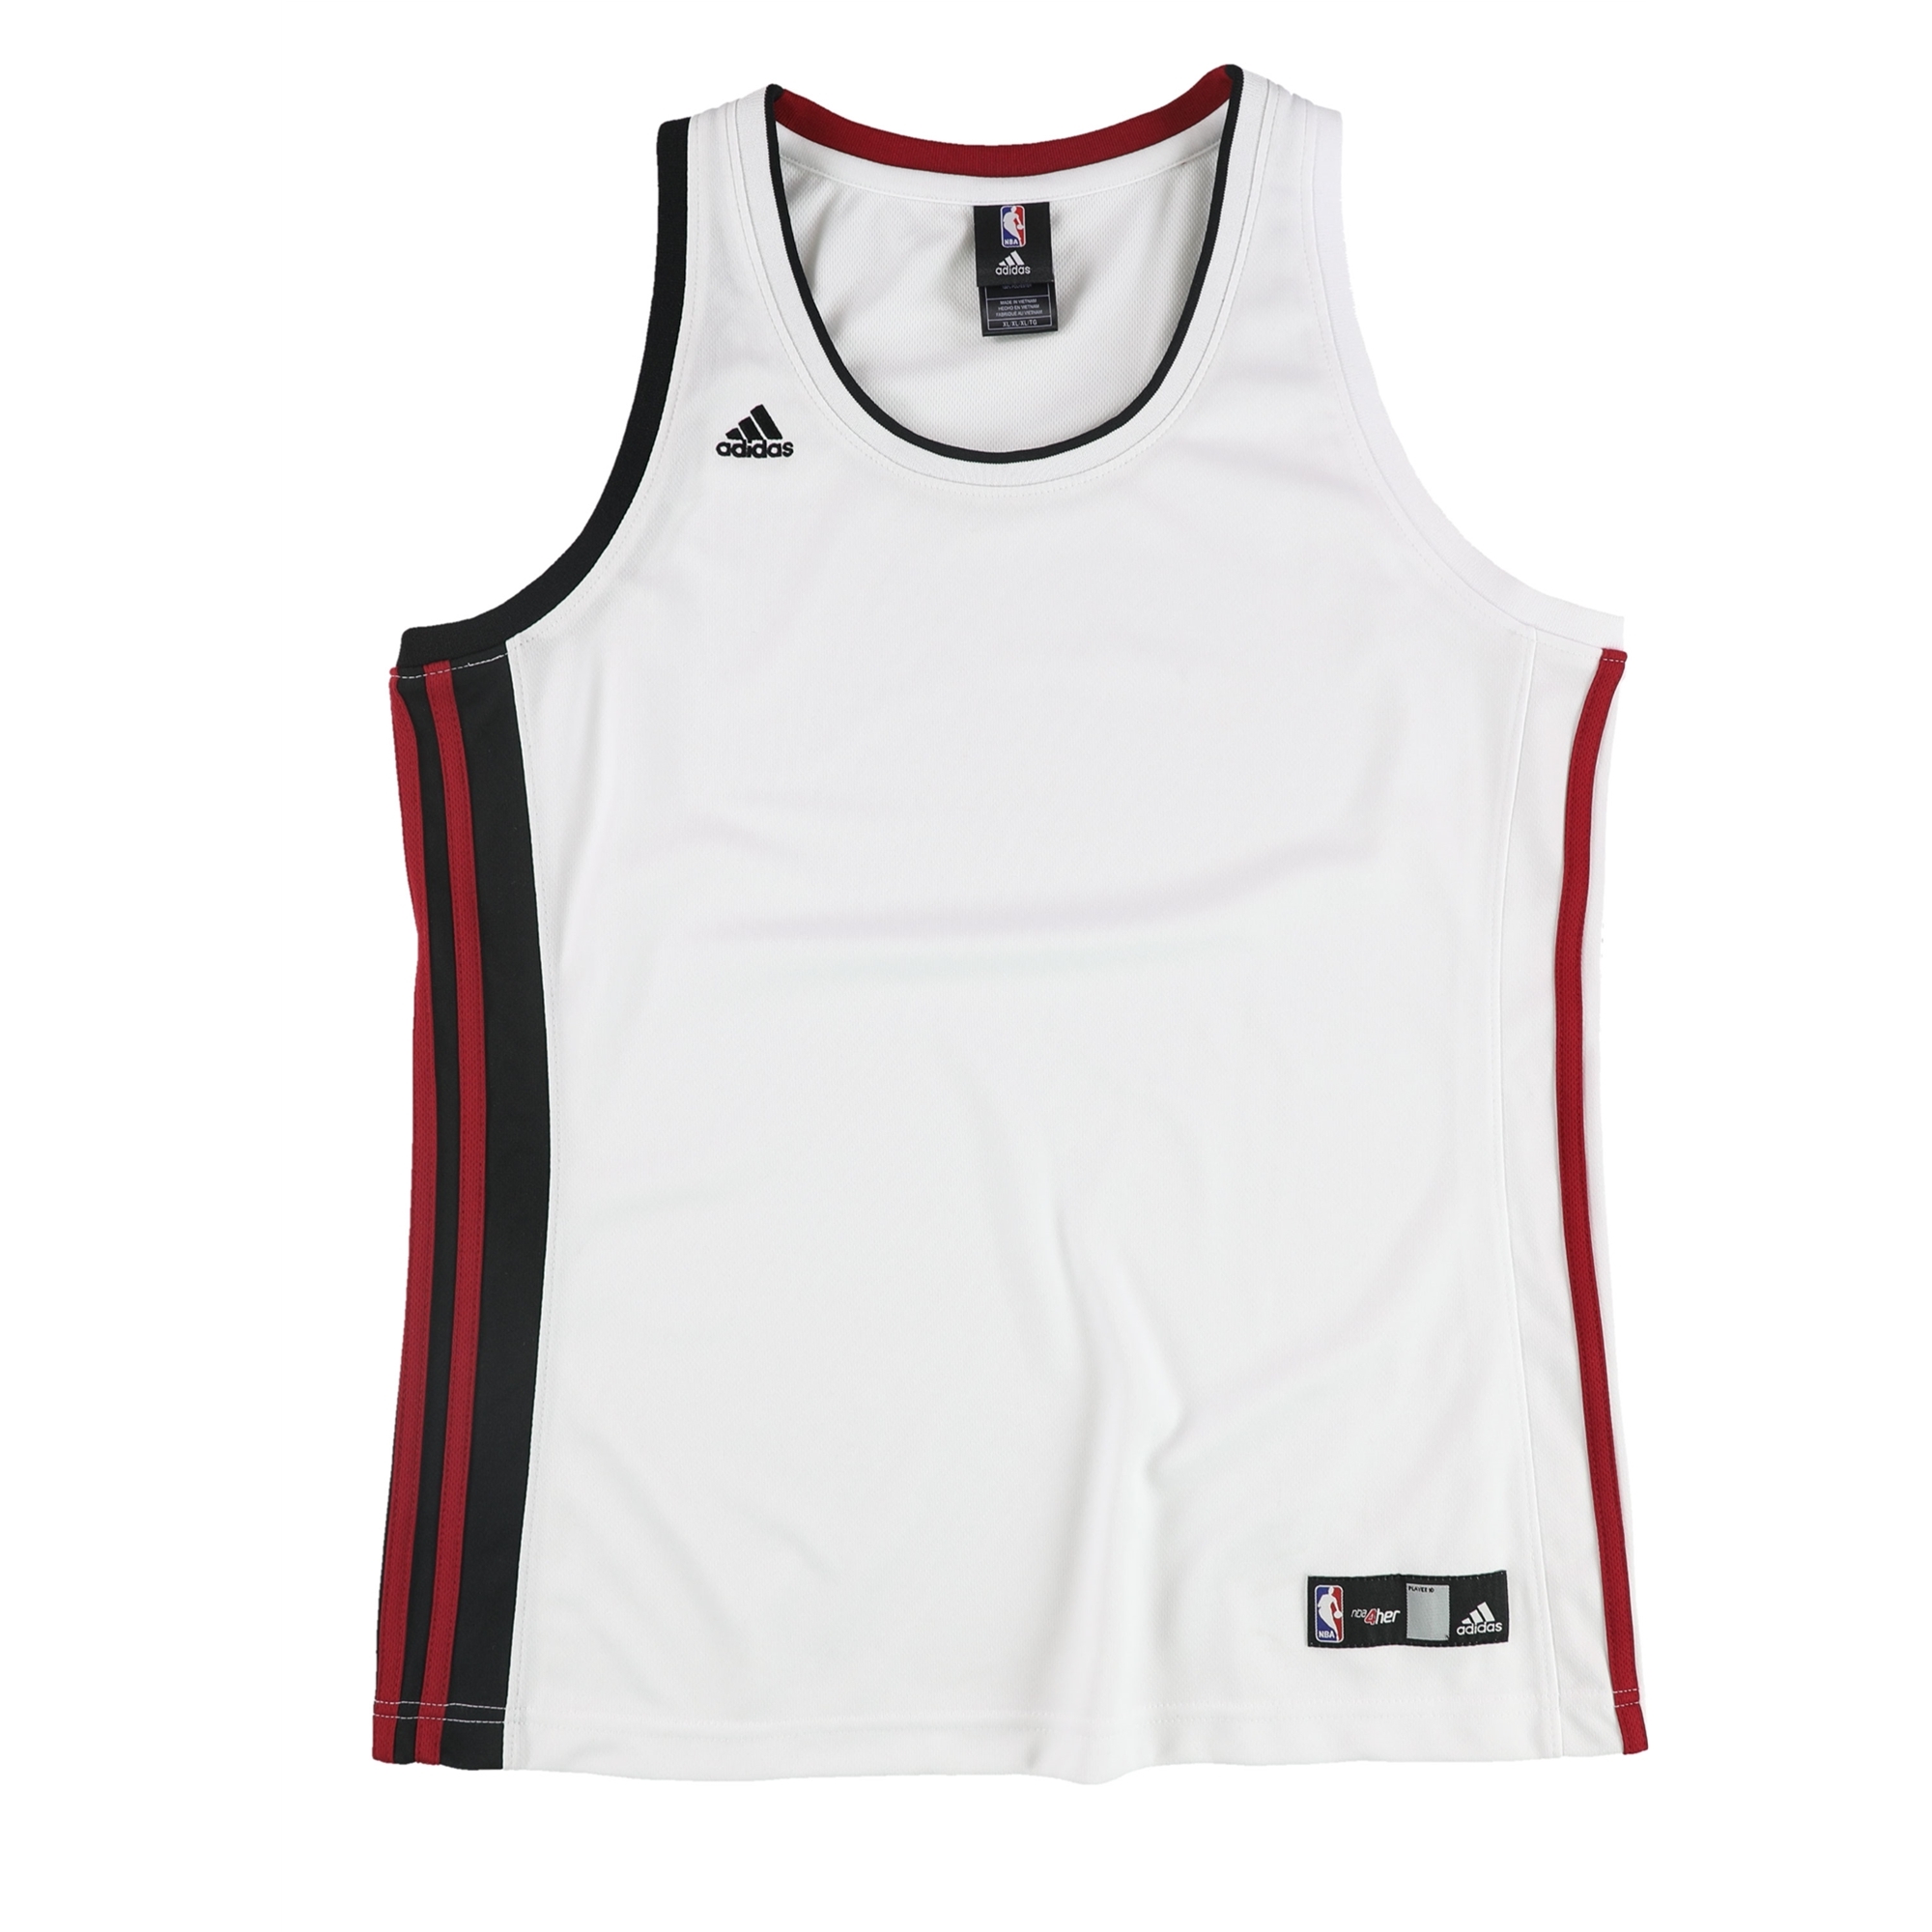 Buy a Adidas Blank NBA Jersey Online | TagsWeekly.com, TW14